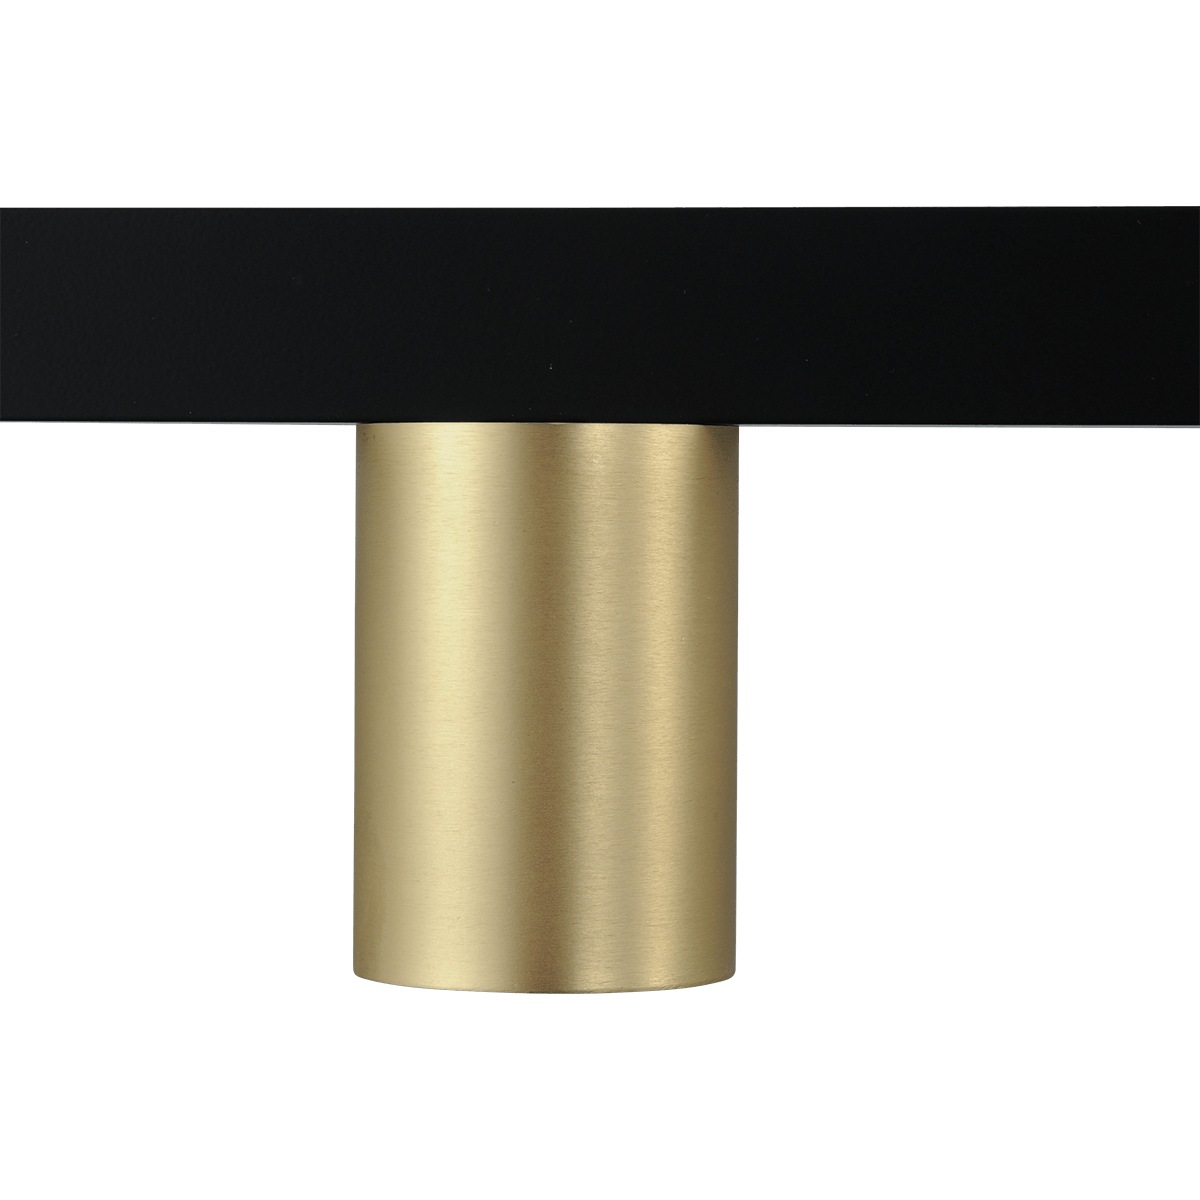 Hanglamp Bounce zwart/mat goud 4-lichts - breedte 100cm - exclusief 4x GU10 - MASTERLIGHT